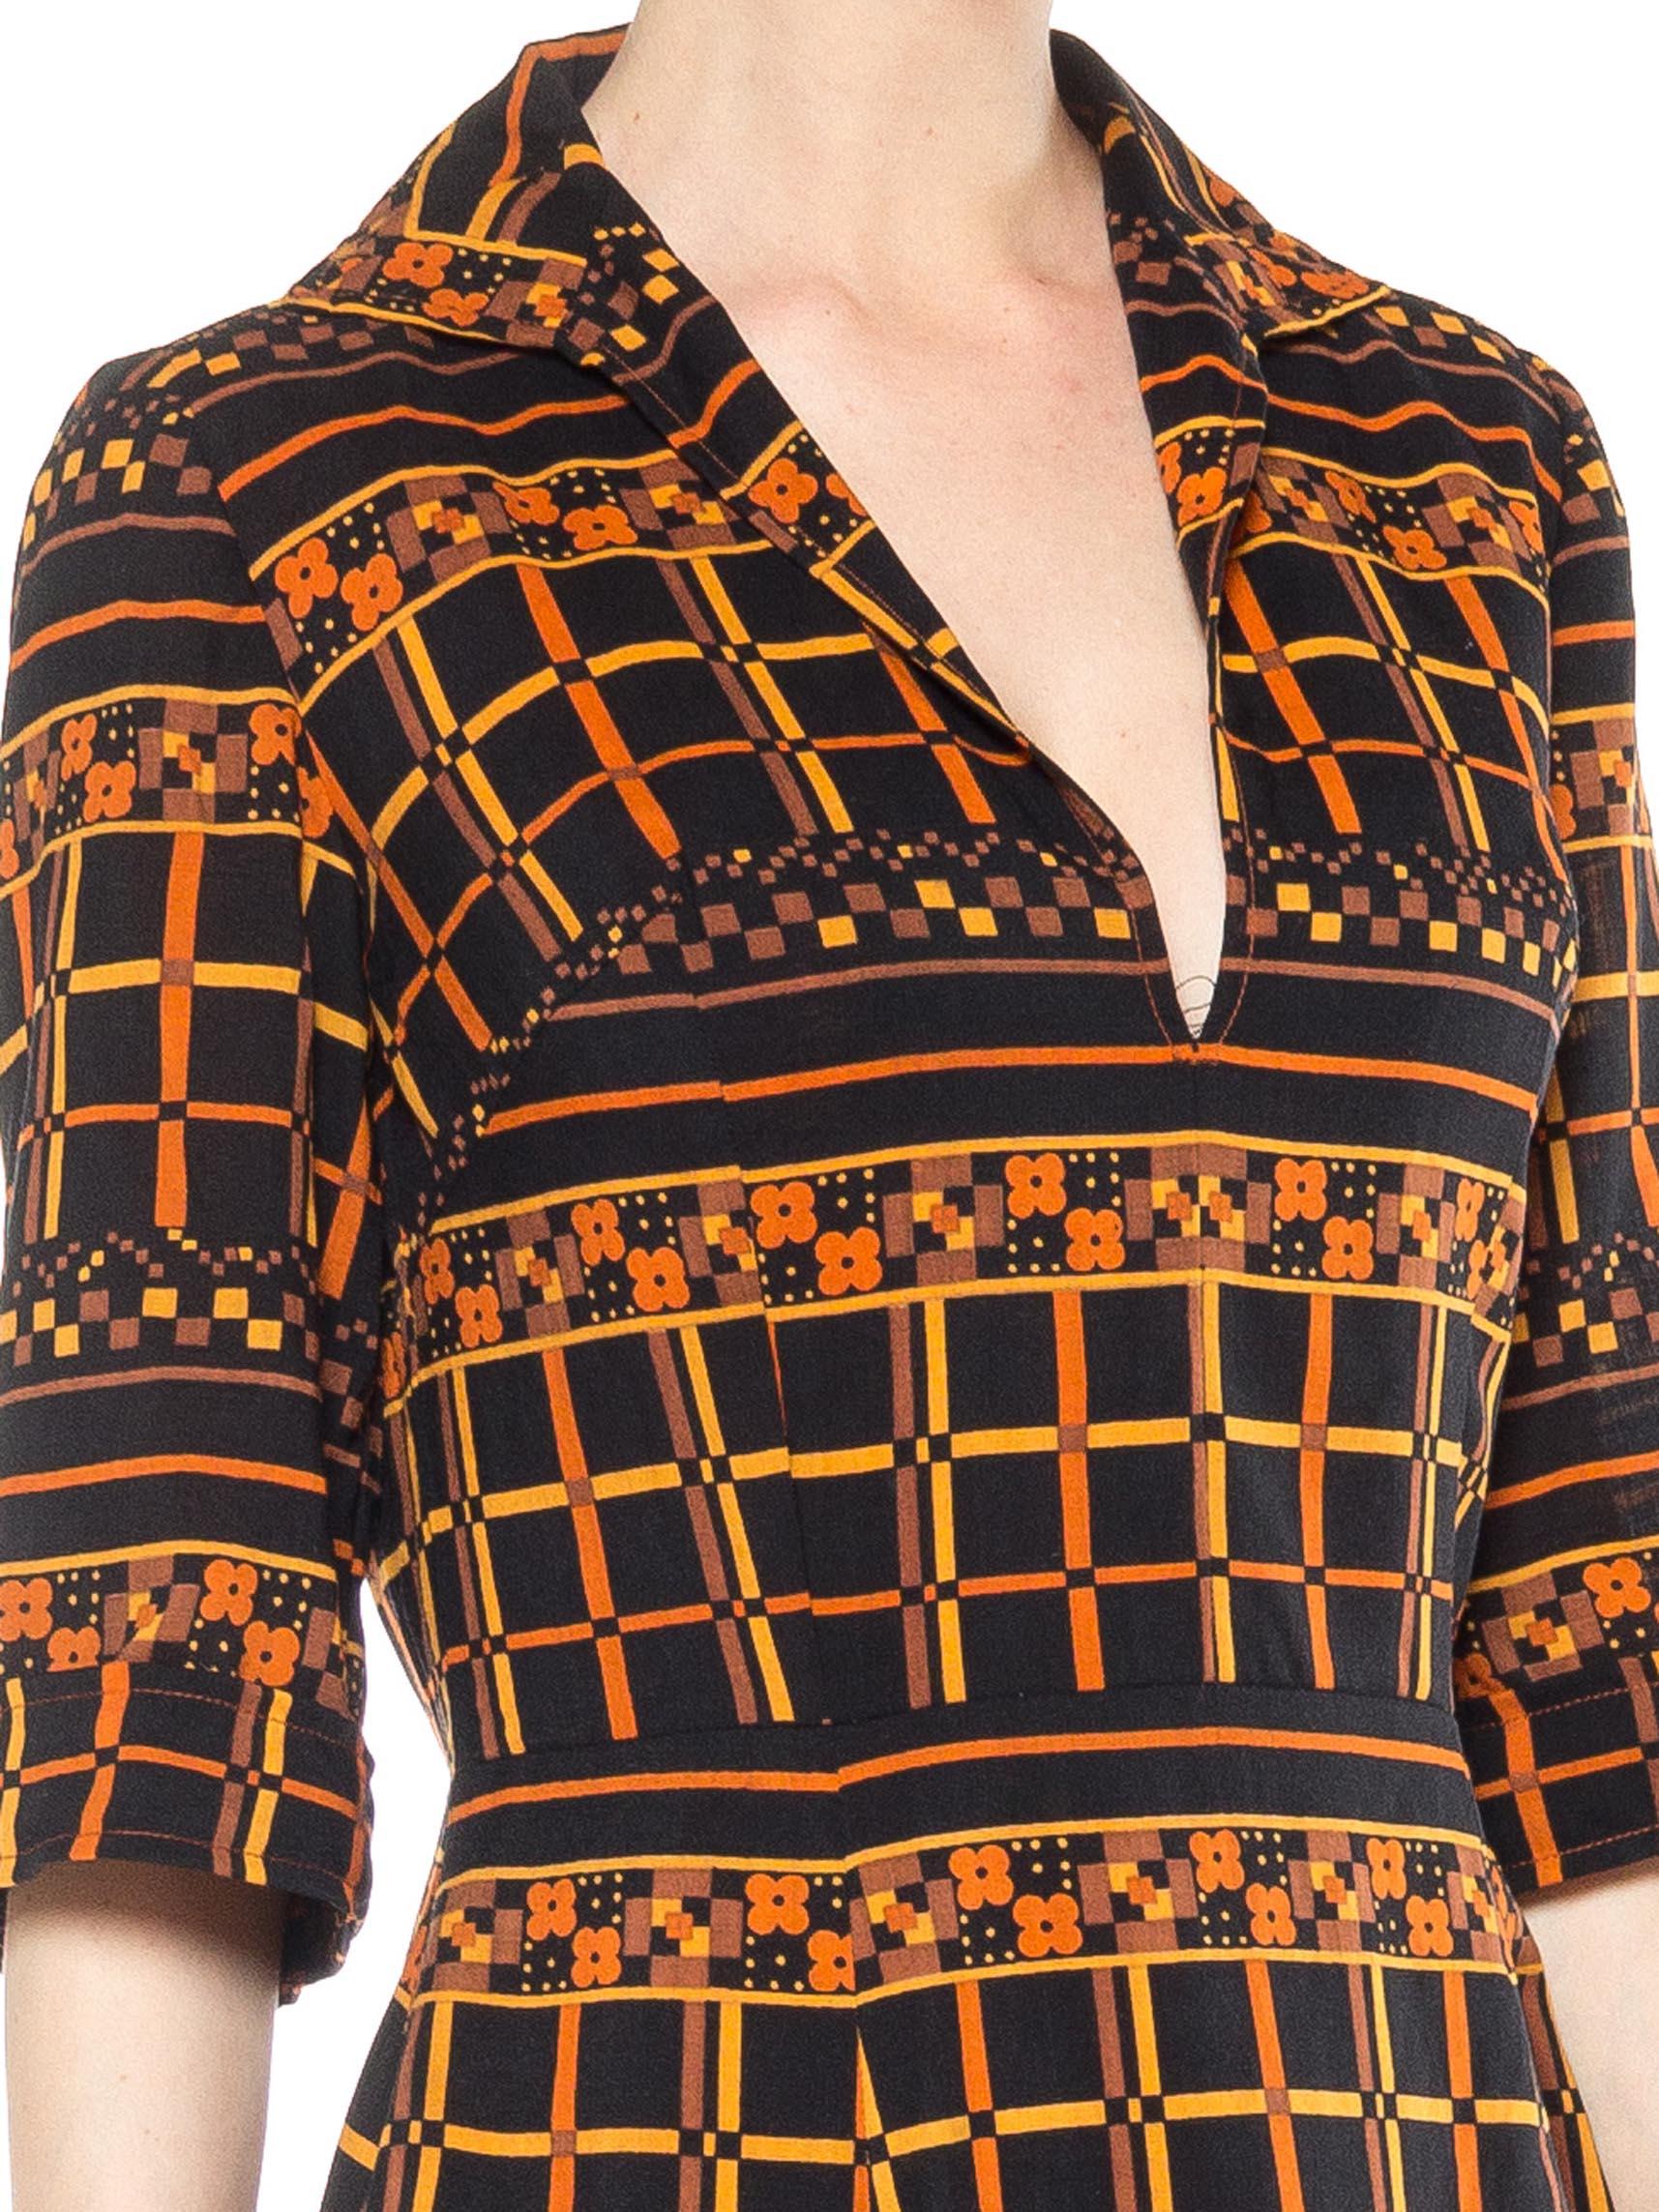 1960S Geometric Printed Wool Mod Dress For Sale 1